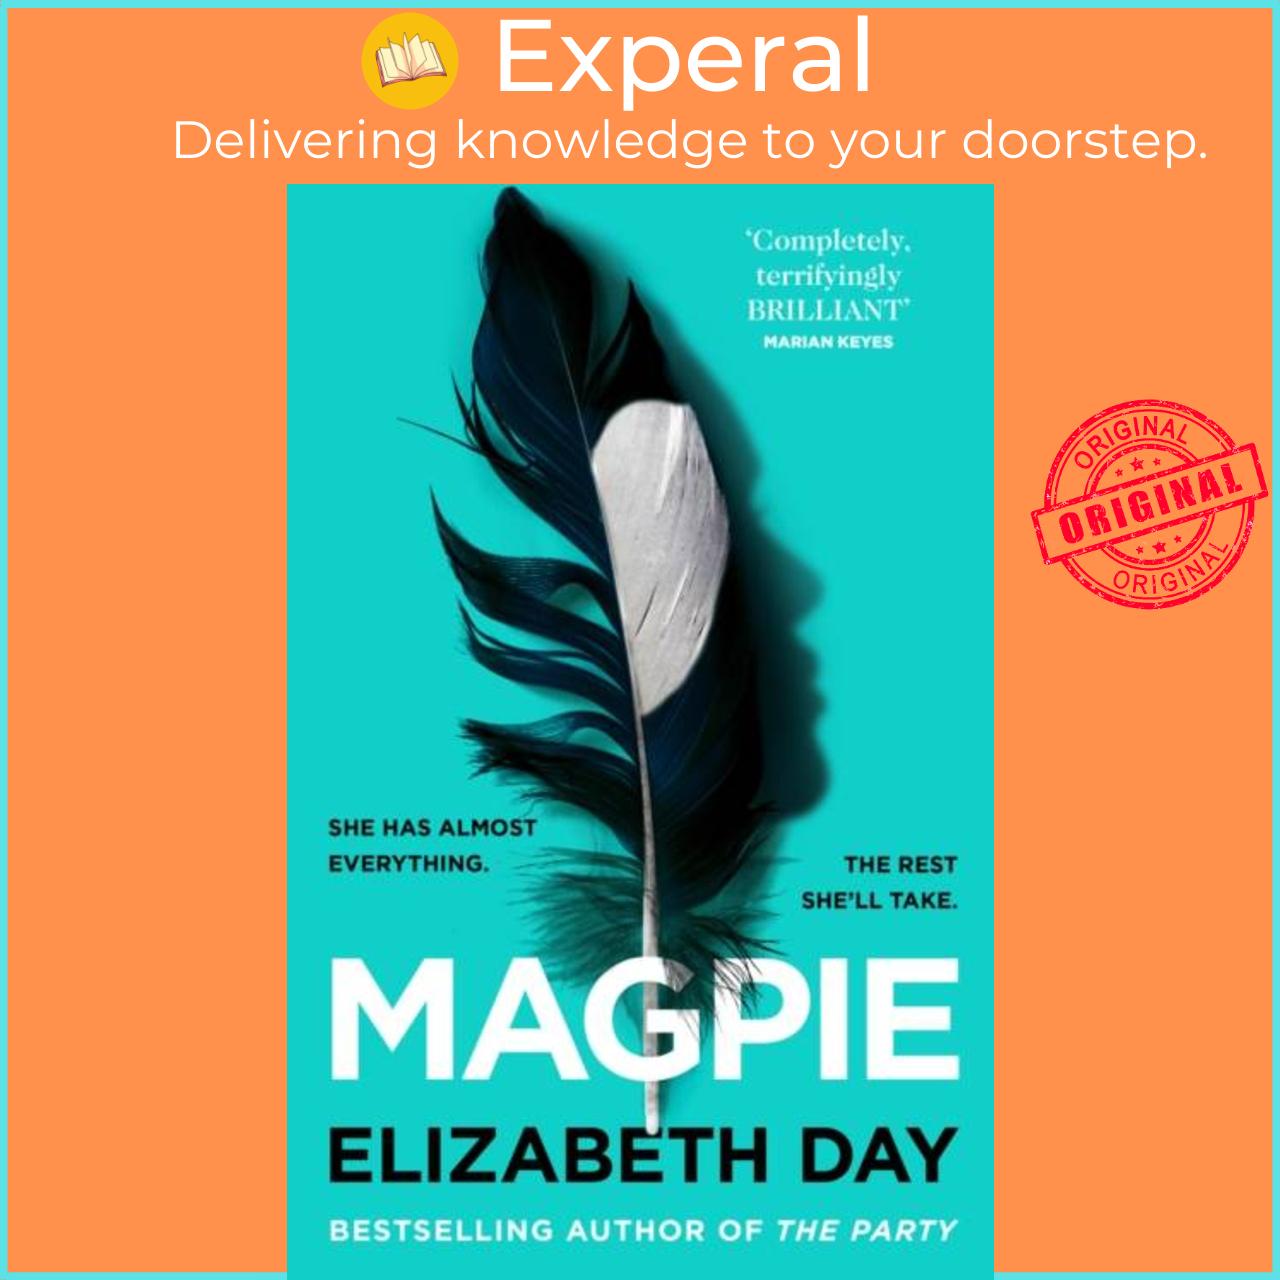 Sách - Magpie by Elizabeth Day (UK edition, paperback)